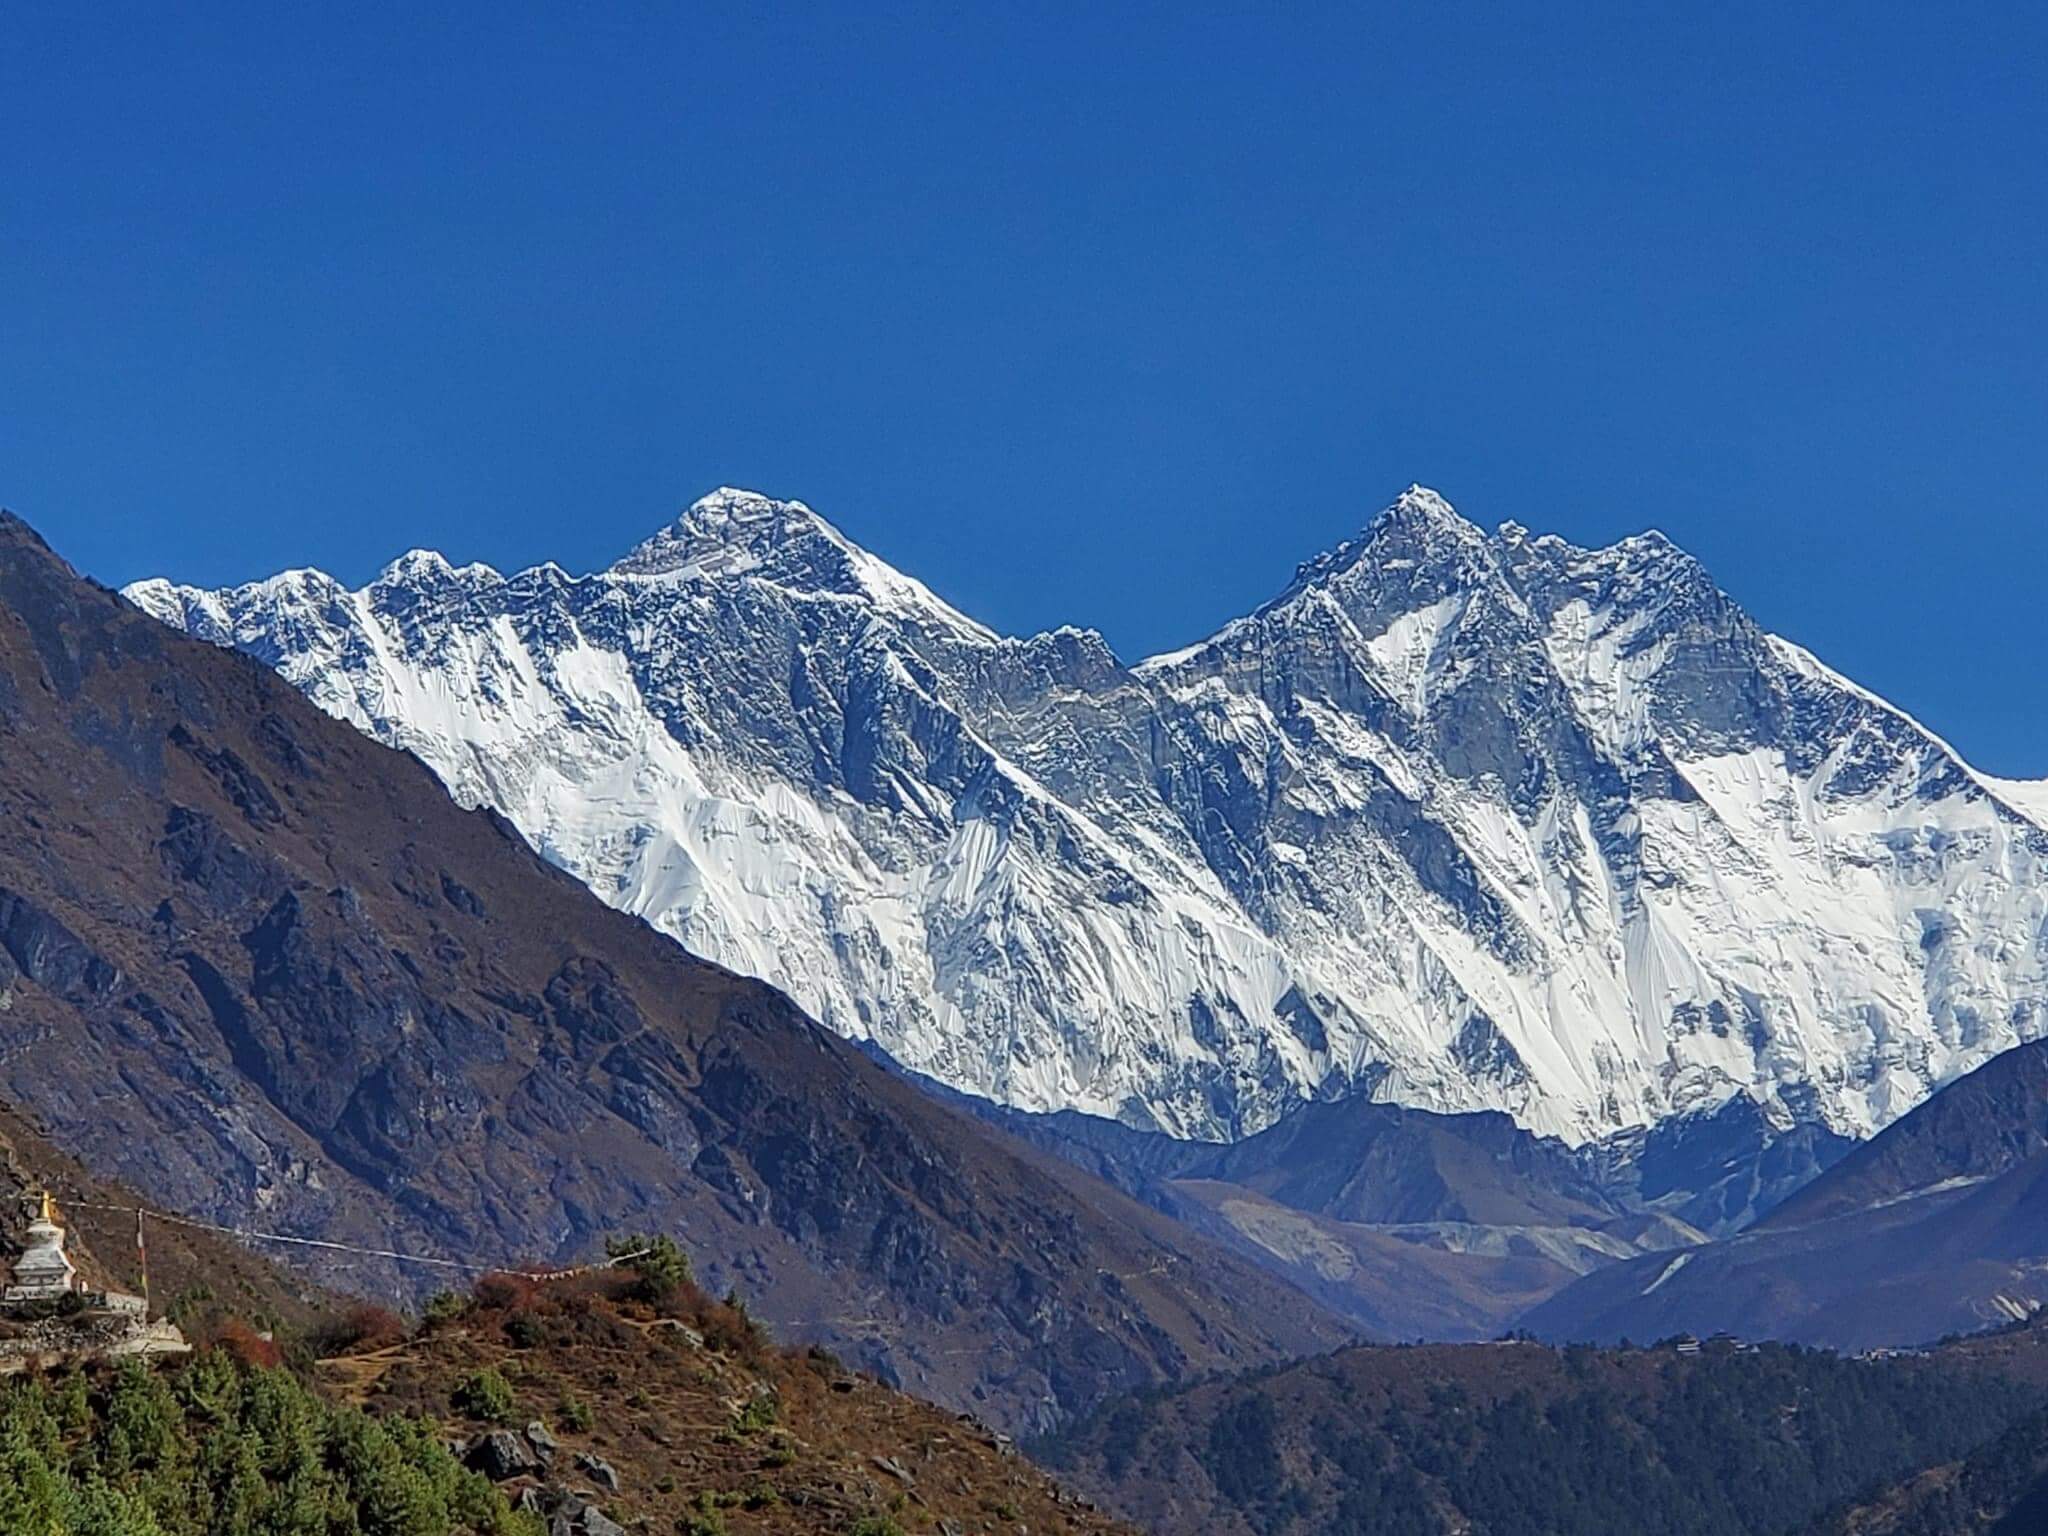 Everest Base Camp Trek with Overland Trek Nepal